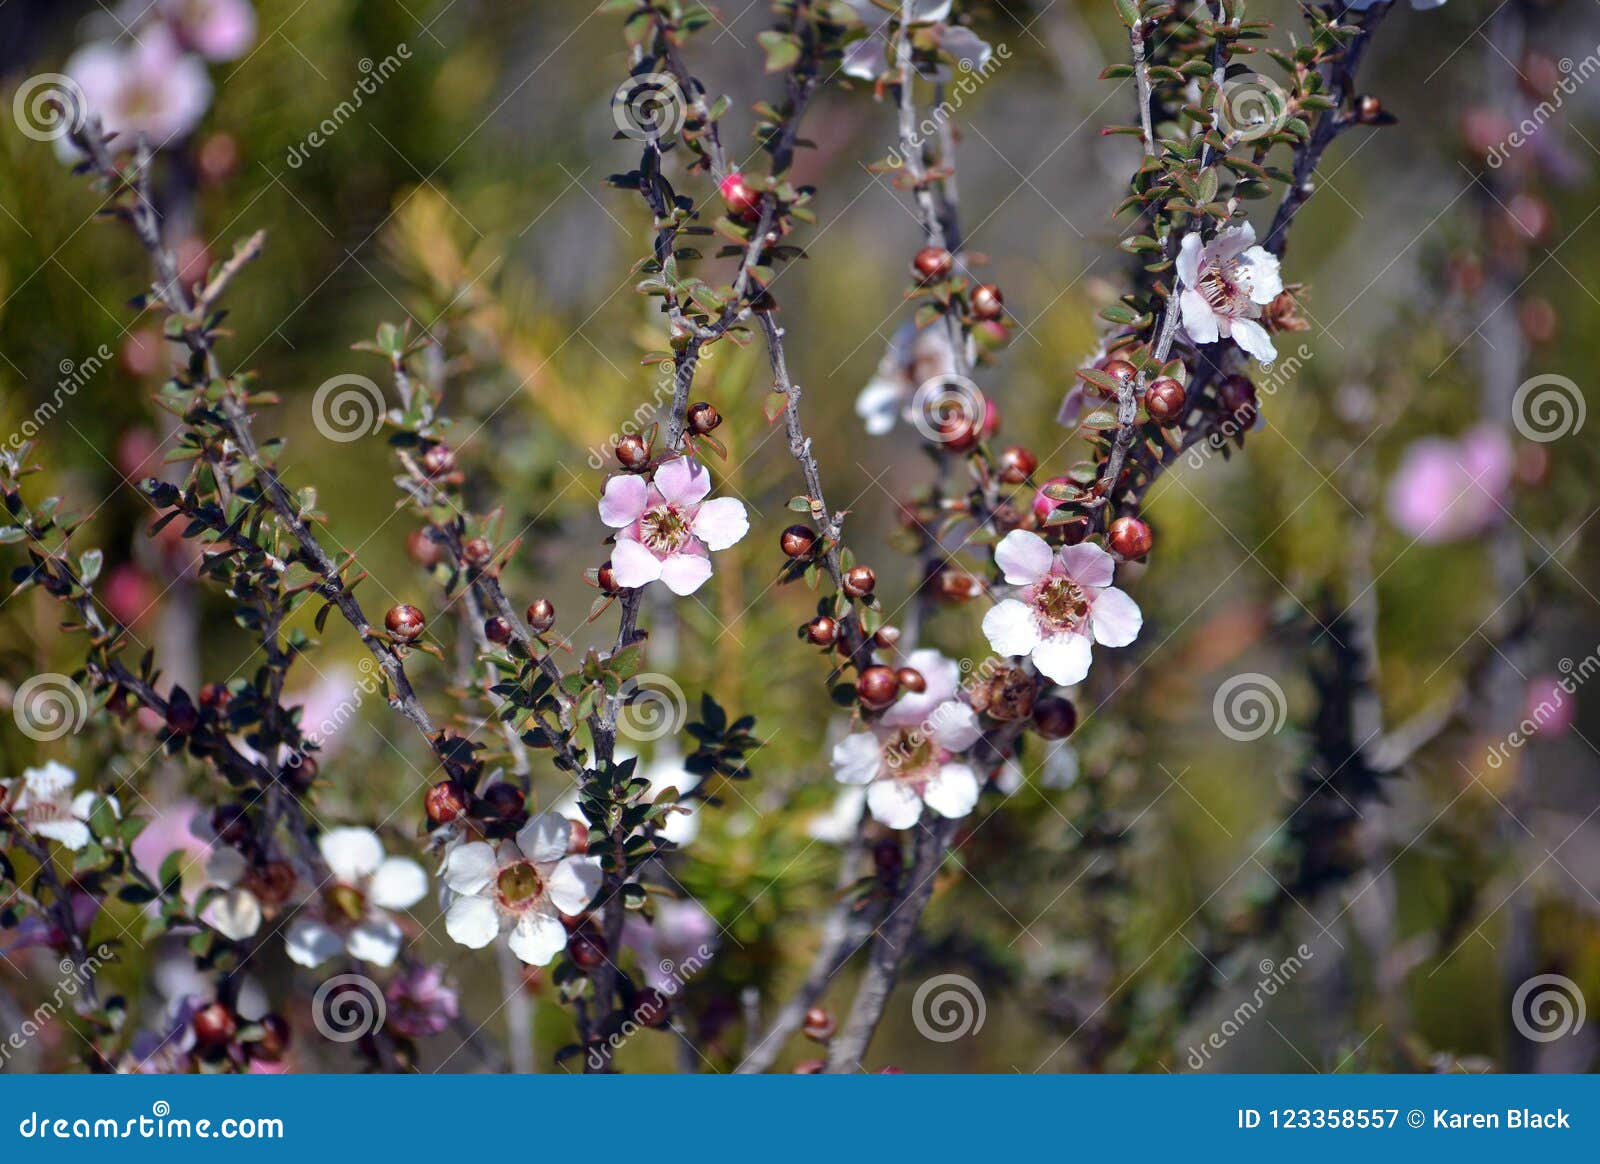 ugunstige Uhøfligt Korea Australian Native Tea Tree Leptospermum Squarrosum Flowers Stock Image -  Image of native, squarrosum: 123358557